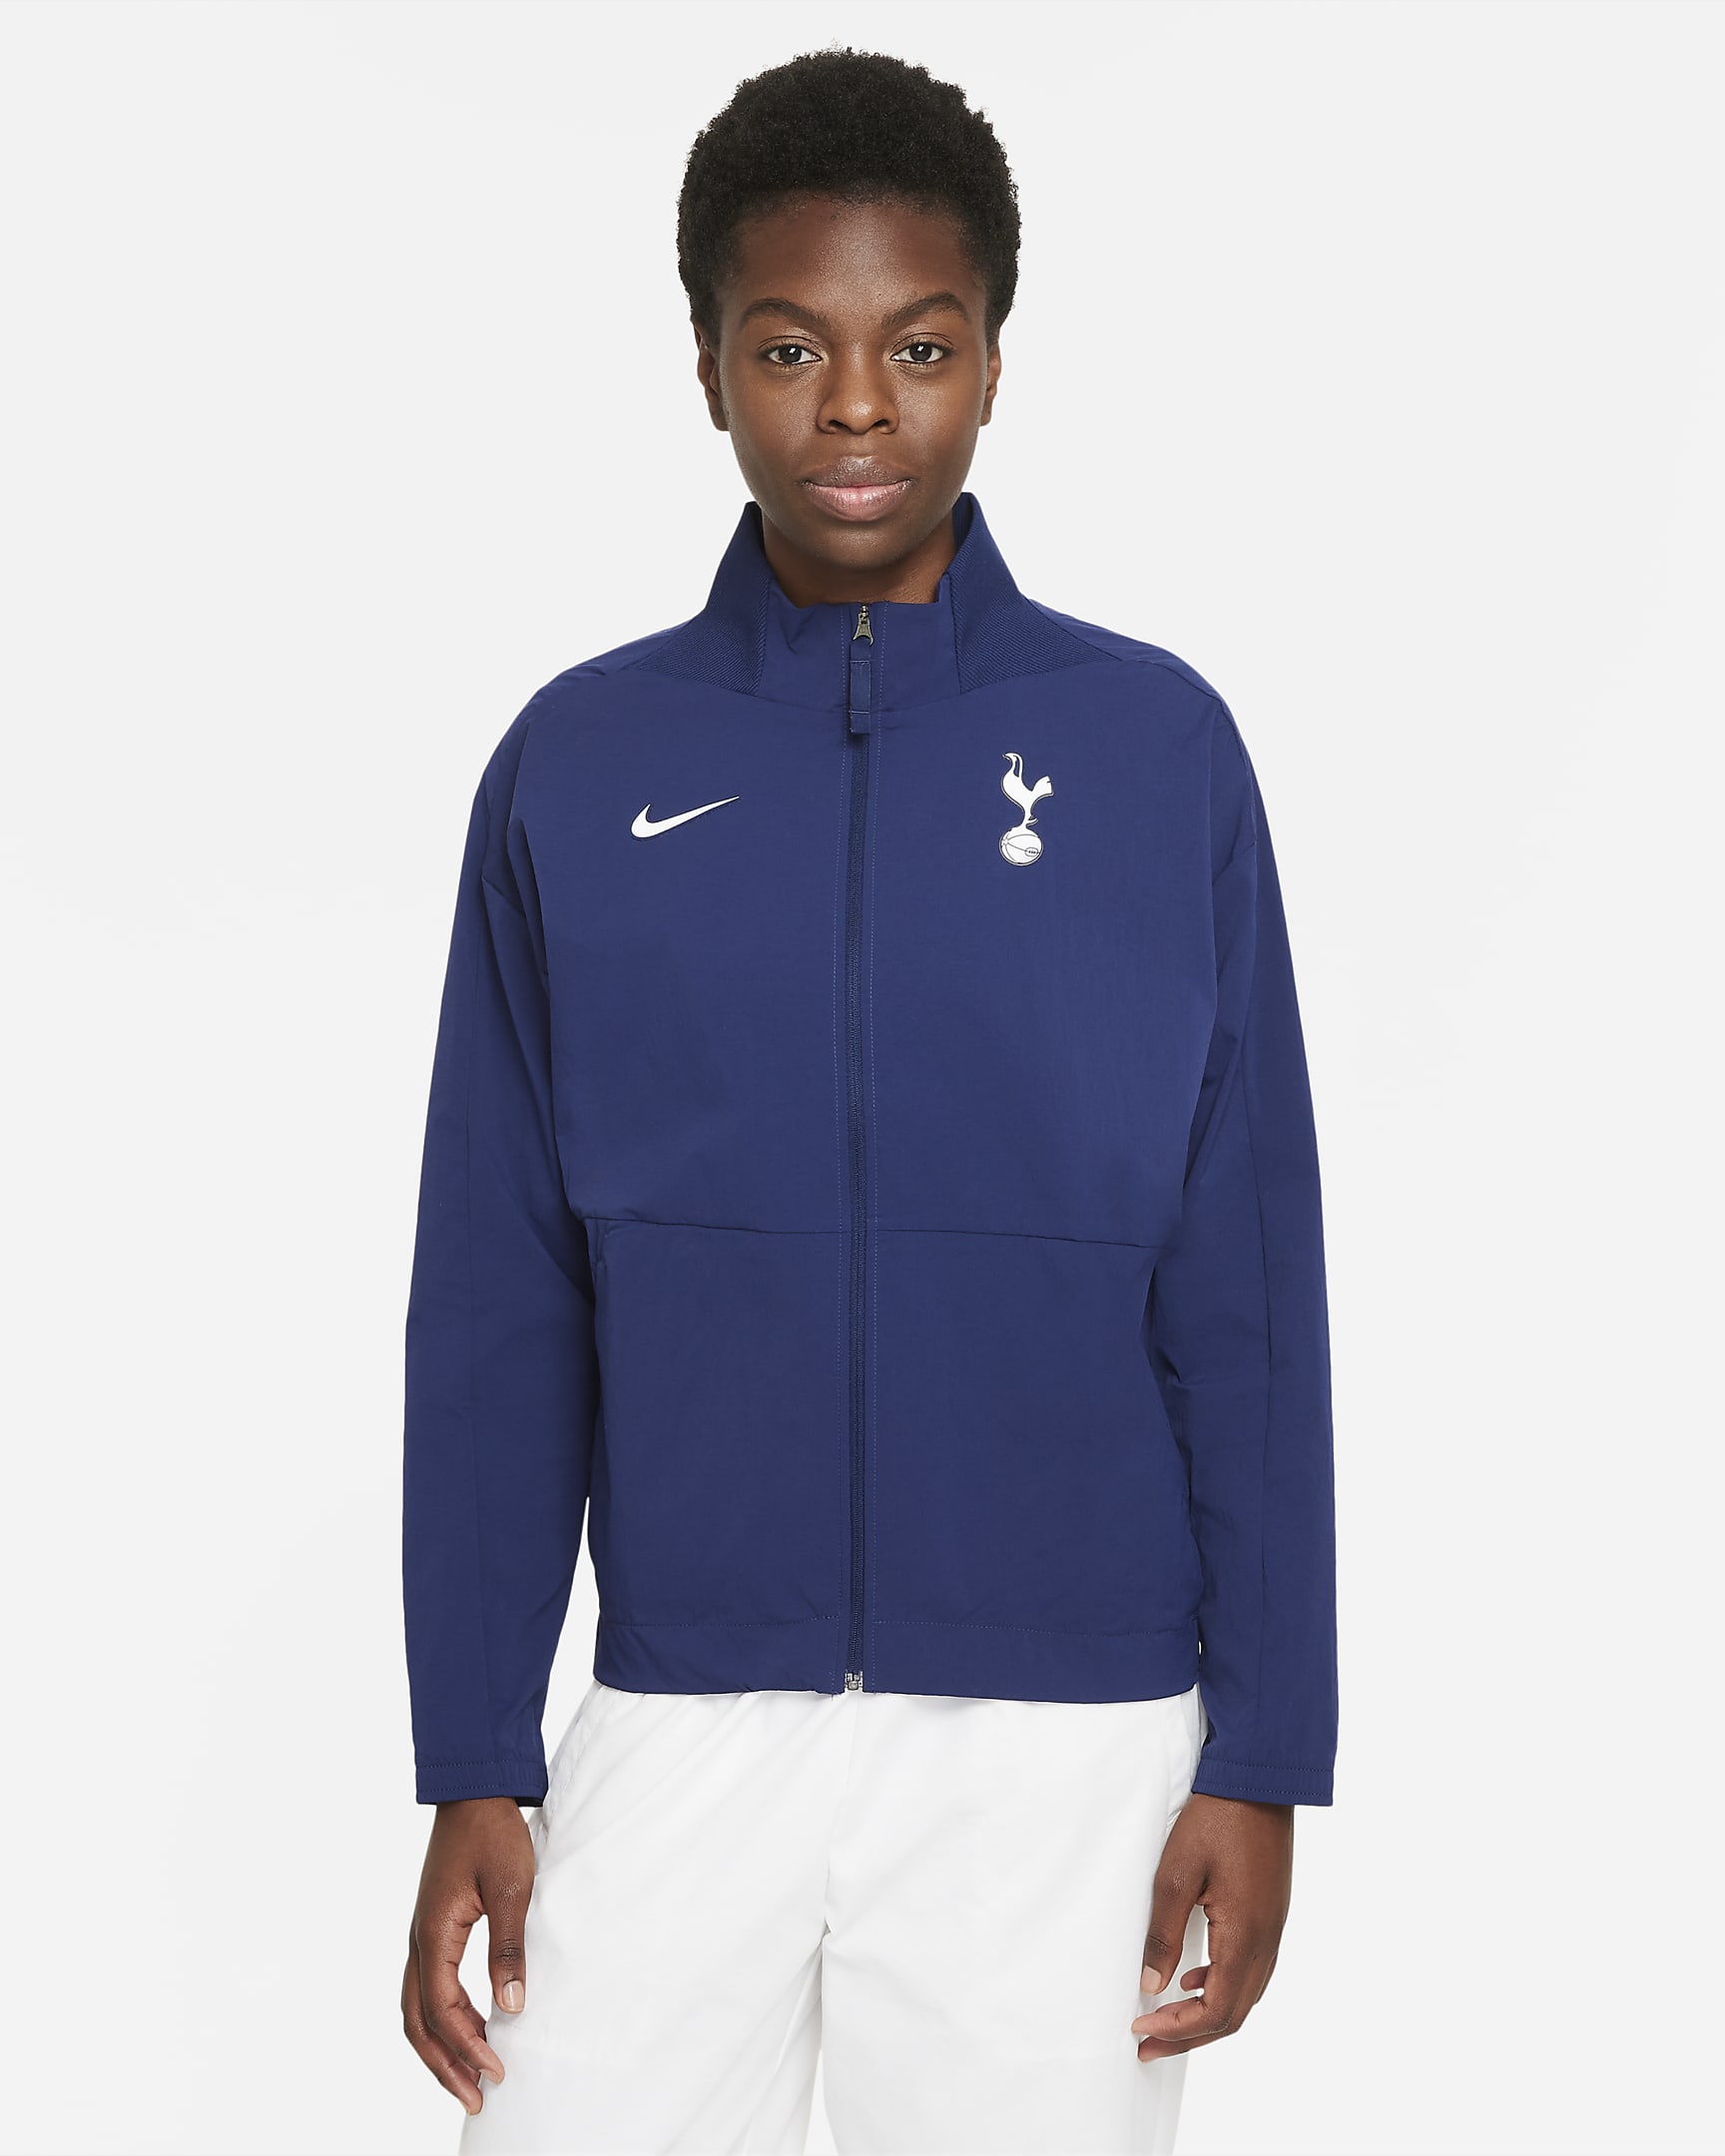 Tottenham Hotspur Women's Nike Dri-FIT Football Jacket. Nike ZA